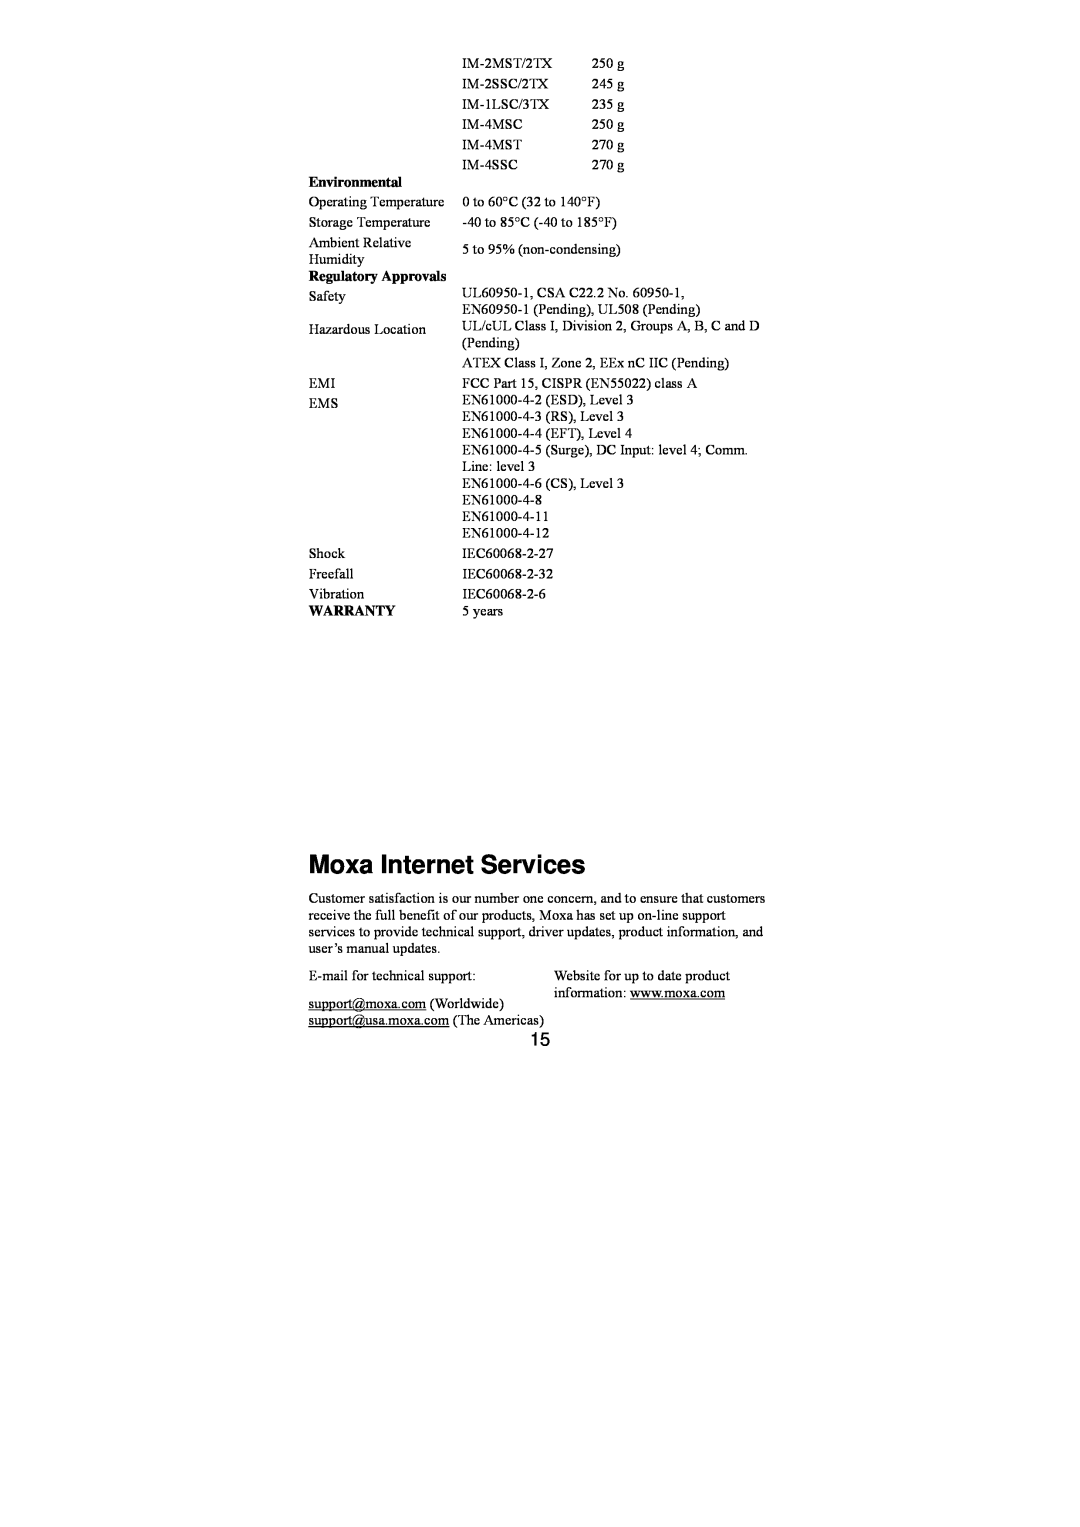 Moxa Technologies EDS-728/828, EDS-828 manual Moxa Internet Services, Environmental, Regulatory Approvals, Warranty 